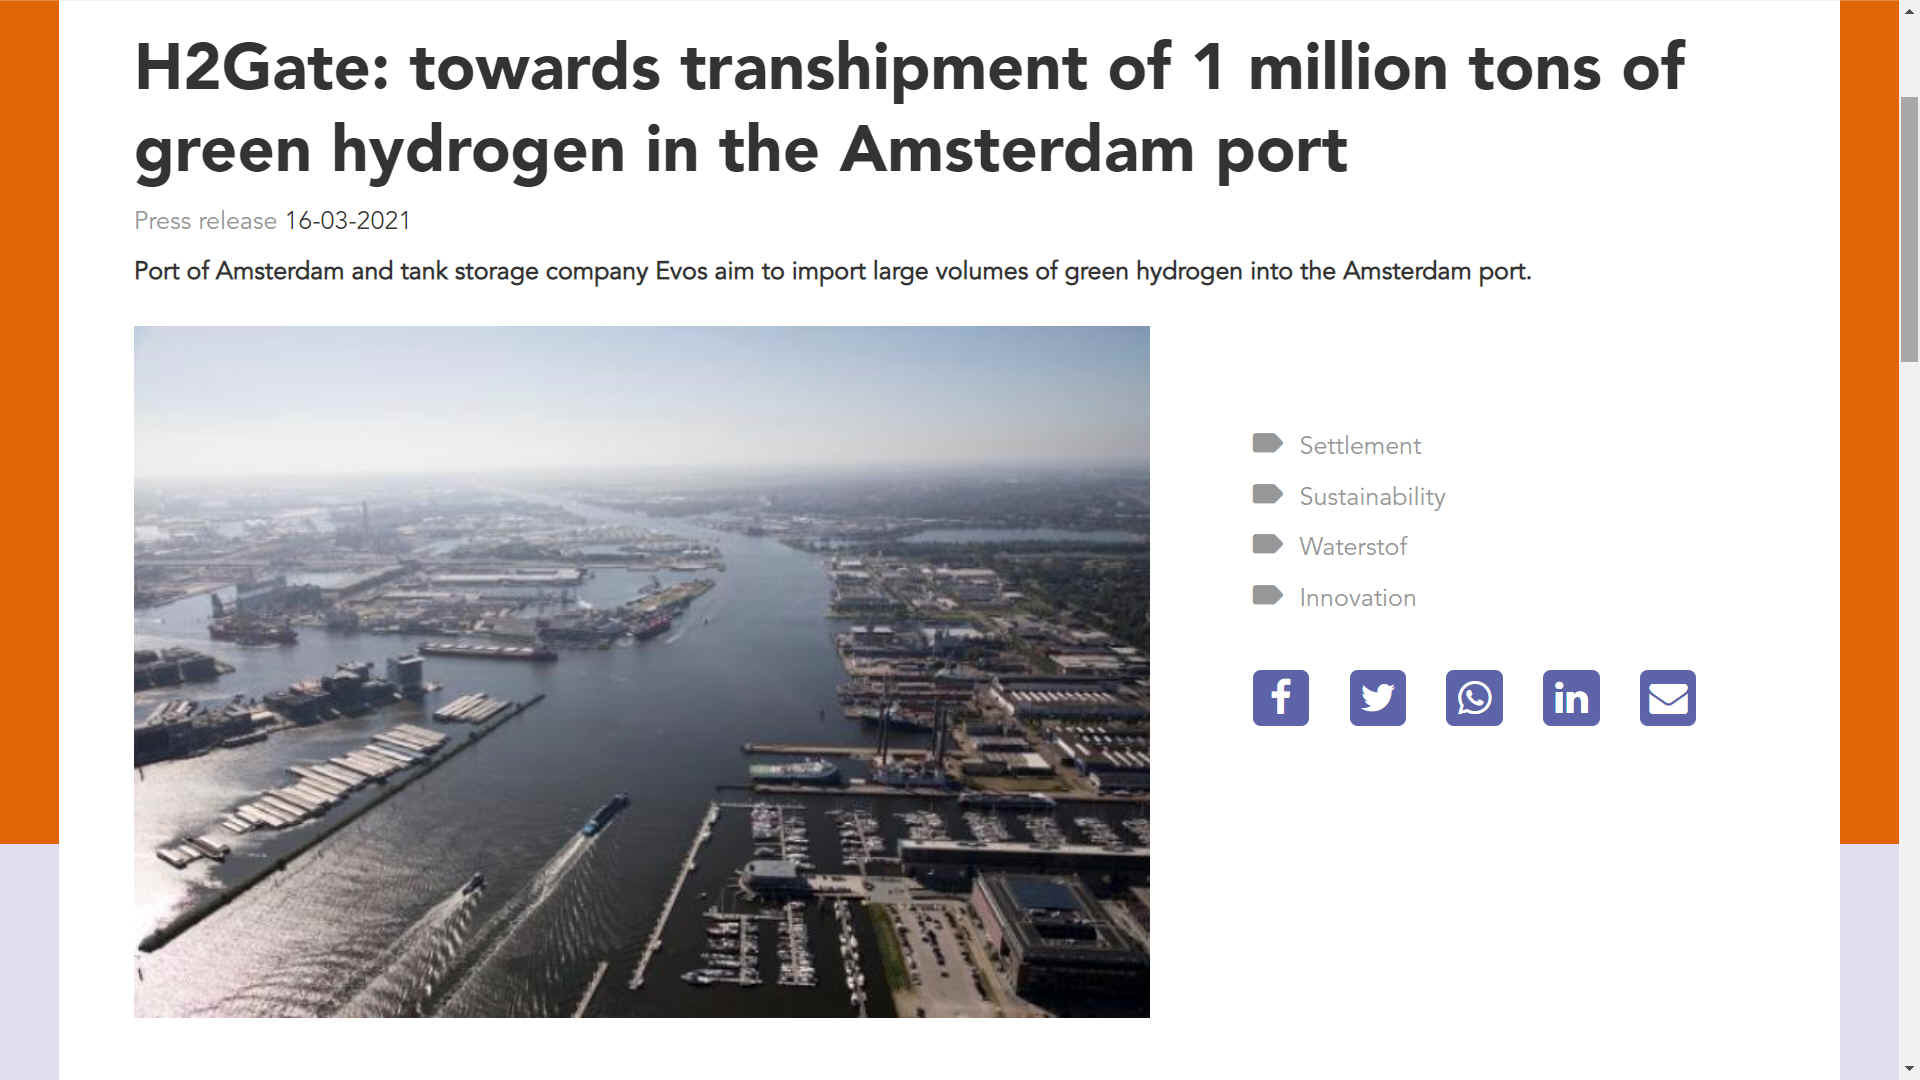 H2Gate: Amsterdam port to transip 1 million tons of green hydrogen